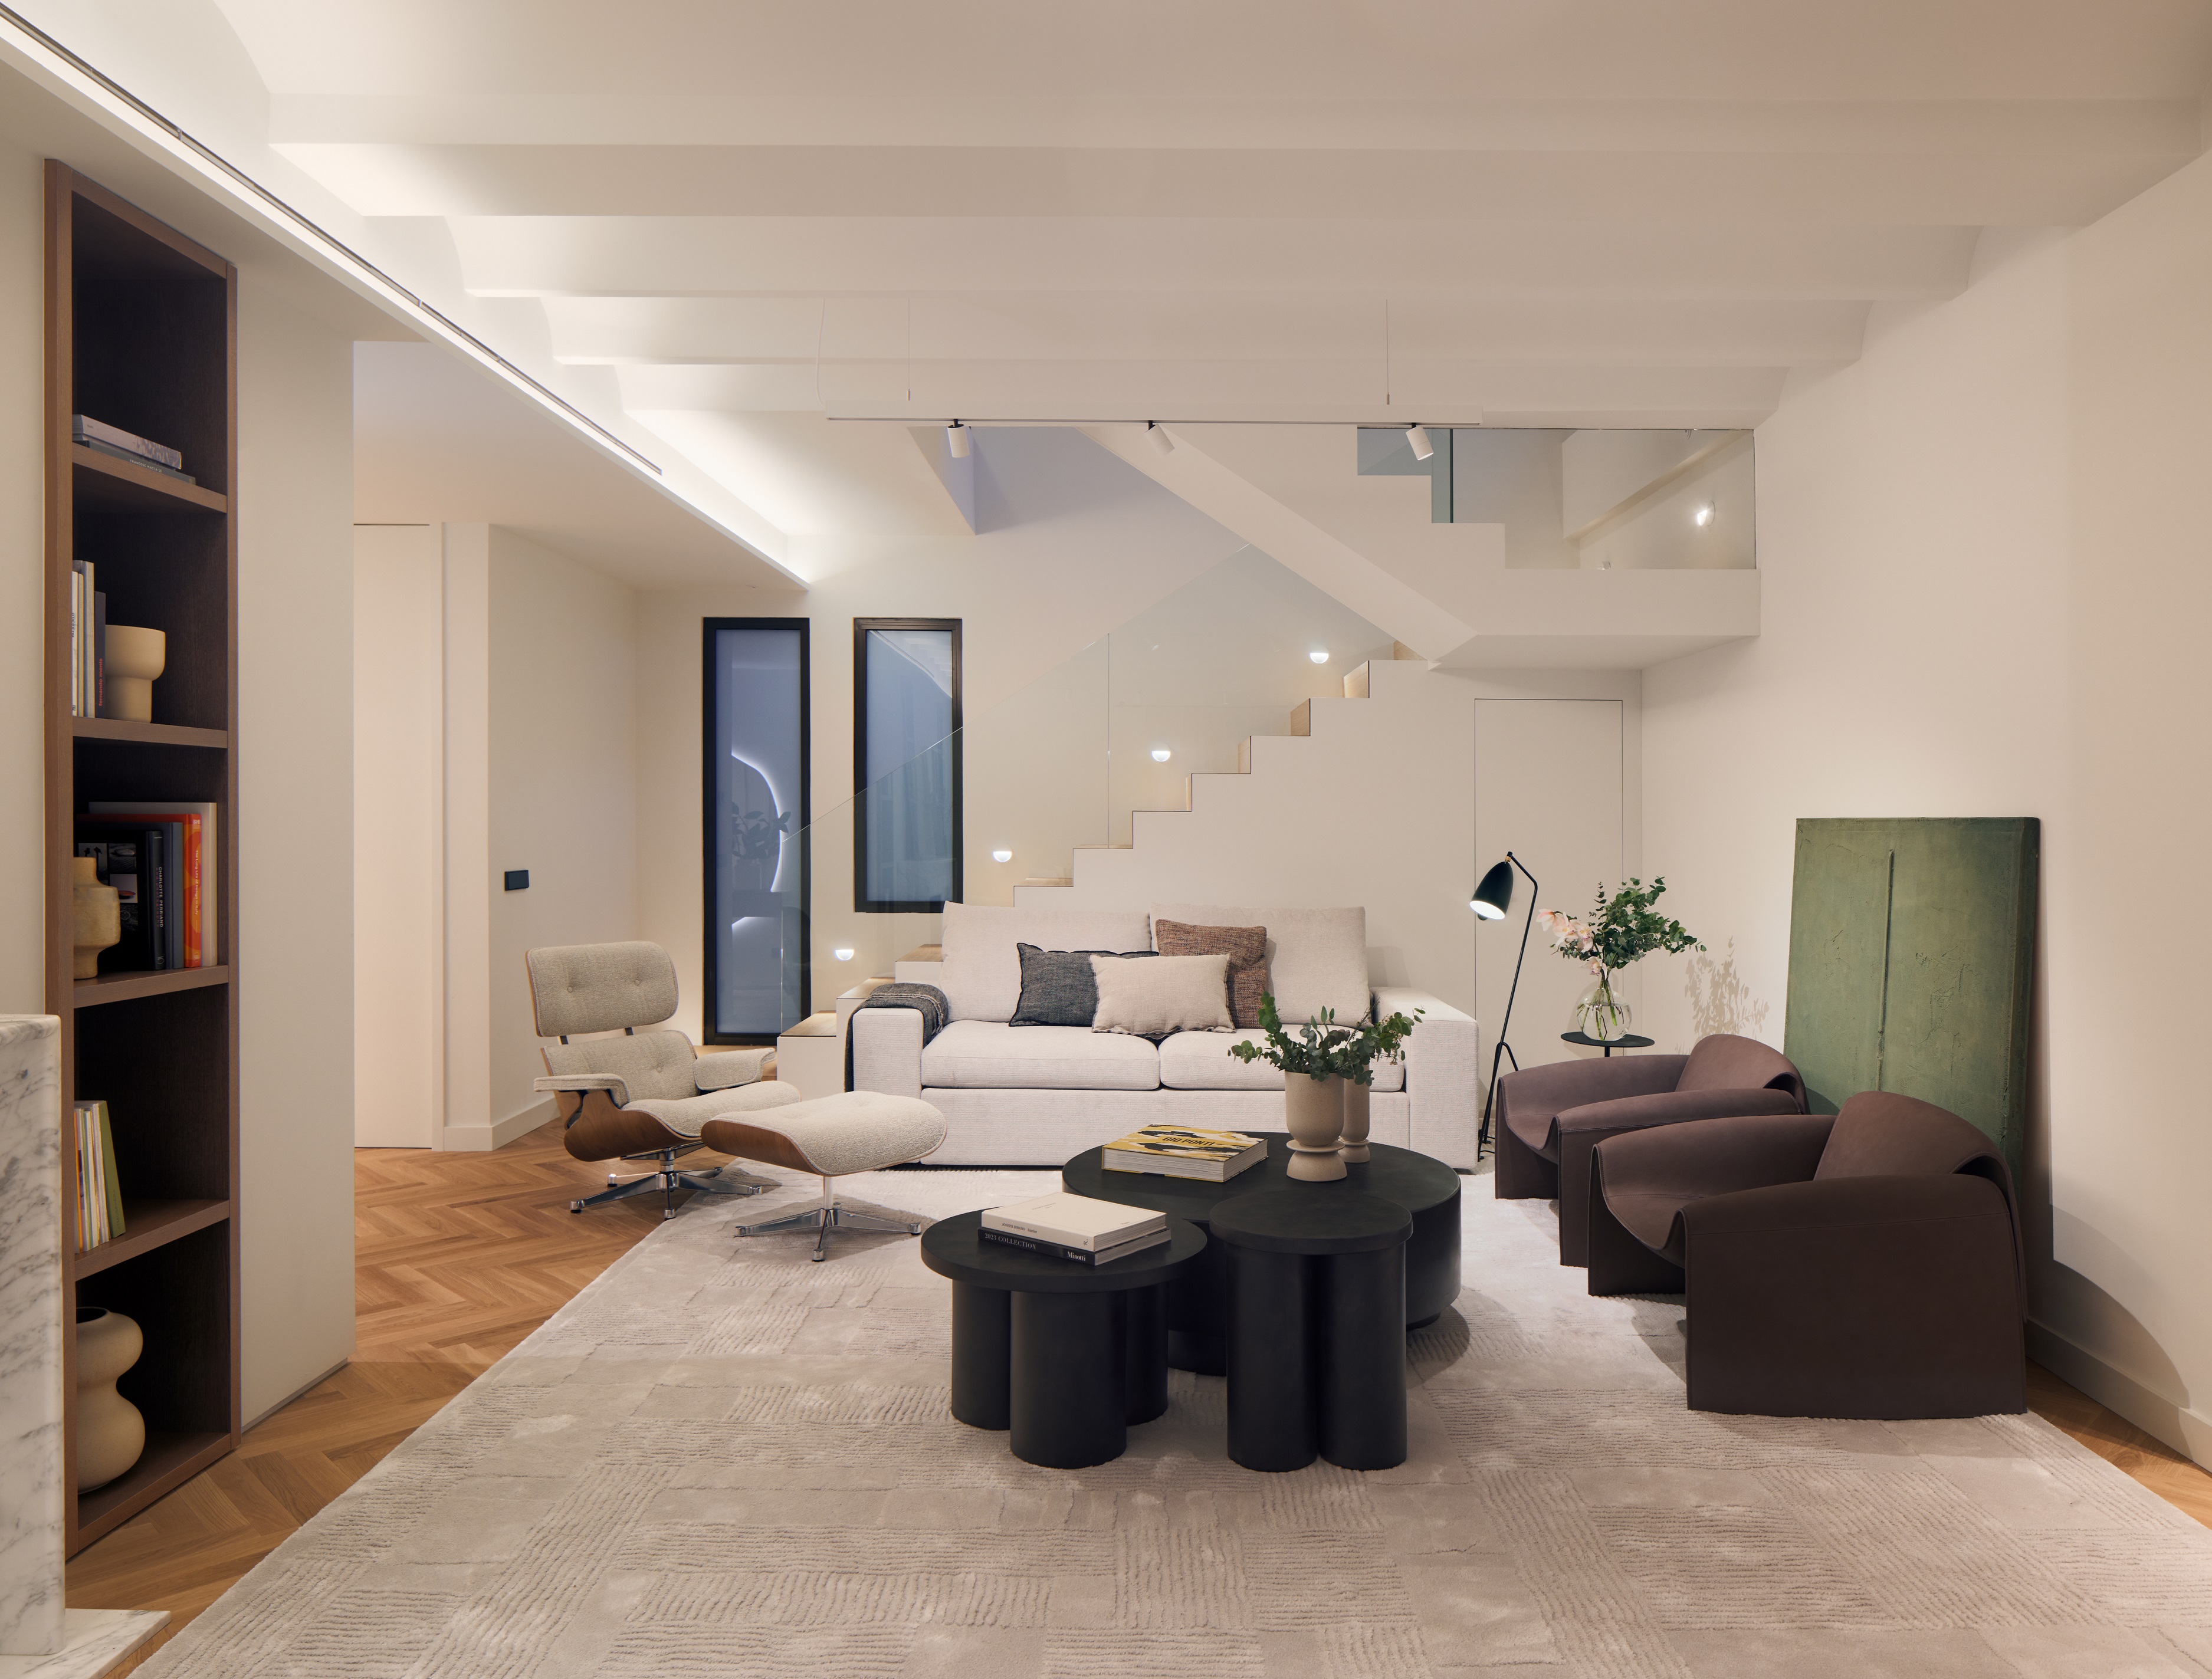 Pedralbes AV. Penthouse LUV Studio Living Room 8 - LUV Studio - Architecture et design - Barcelone